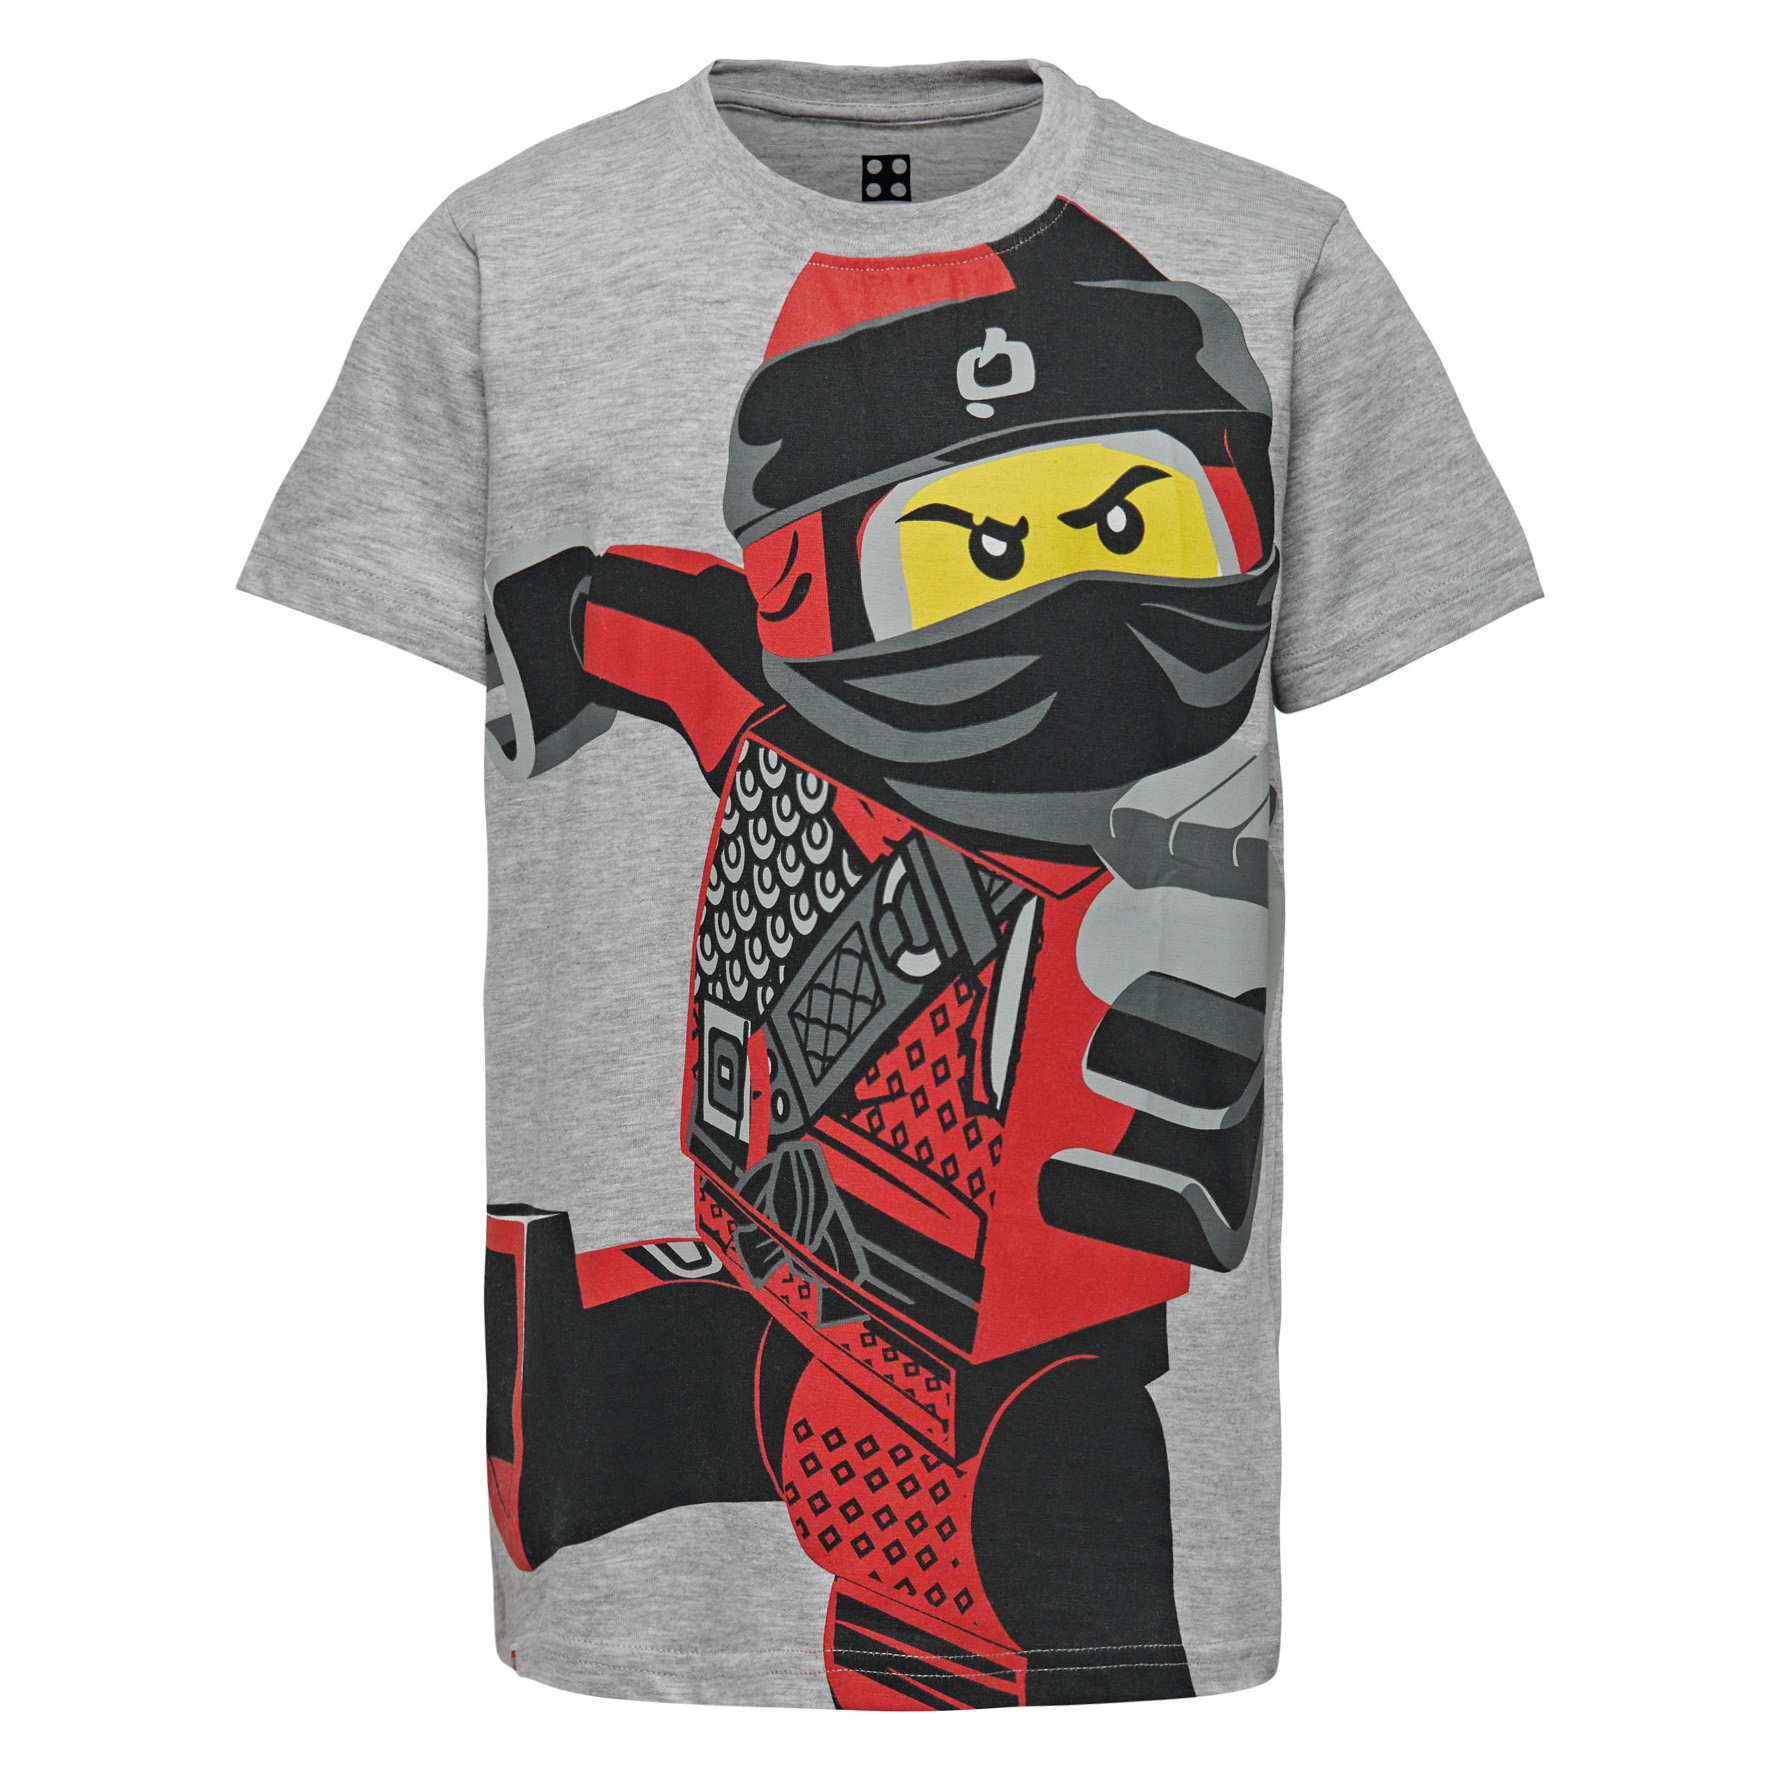 LEGO Wear - Ninjago T-shirt - CM-50229